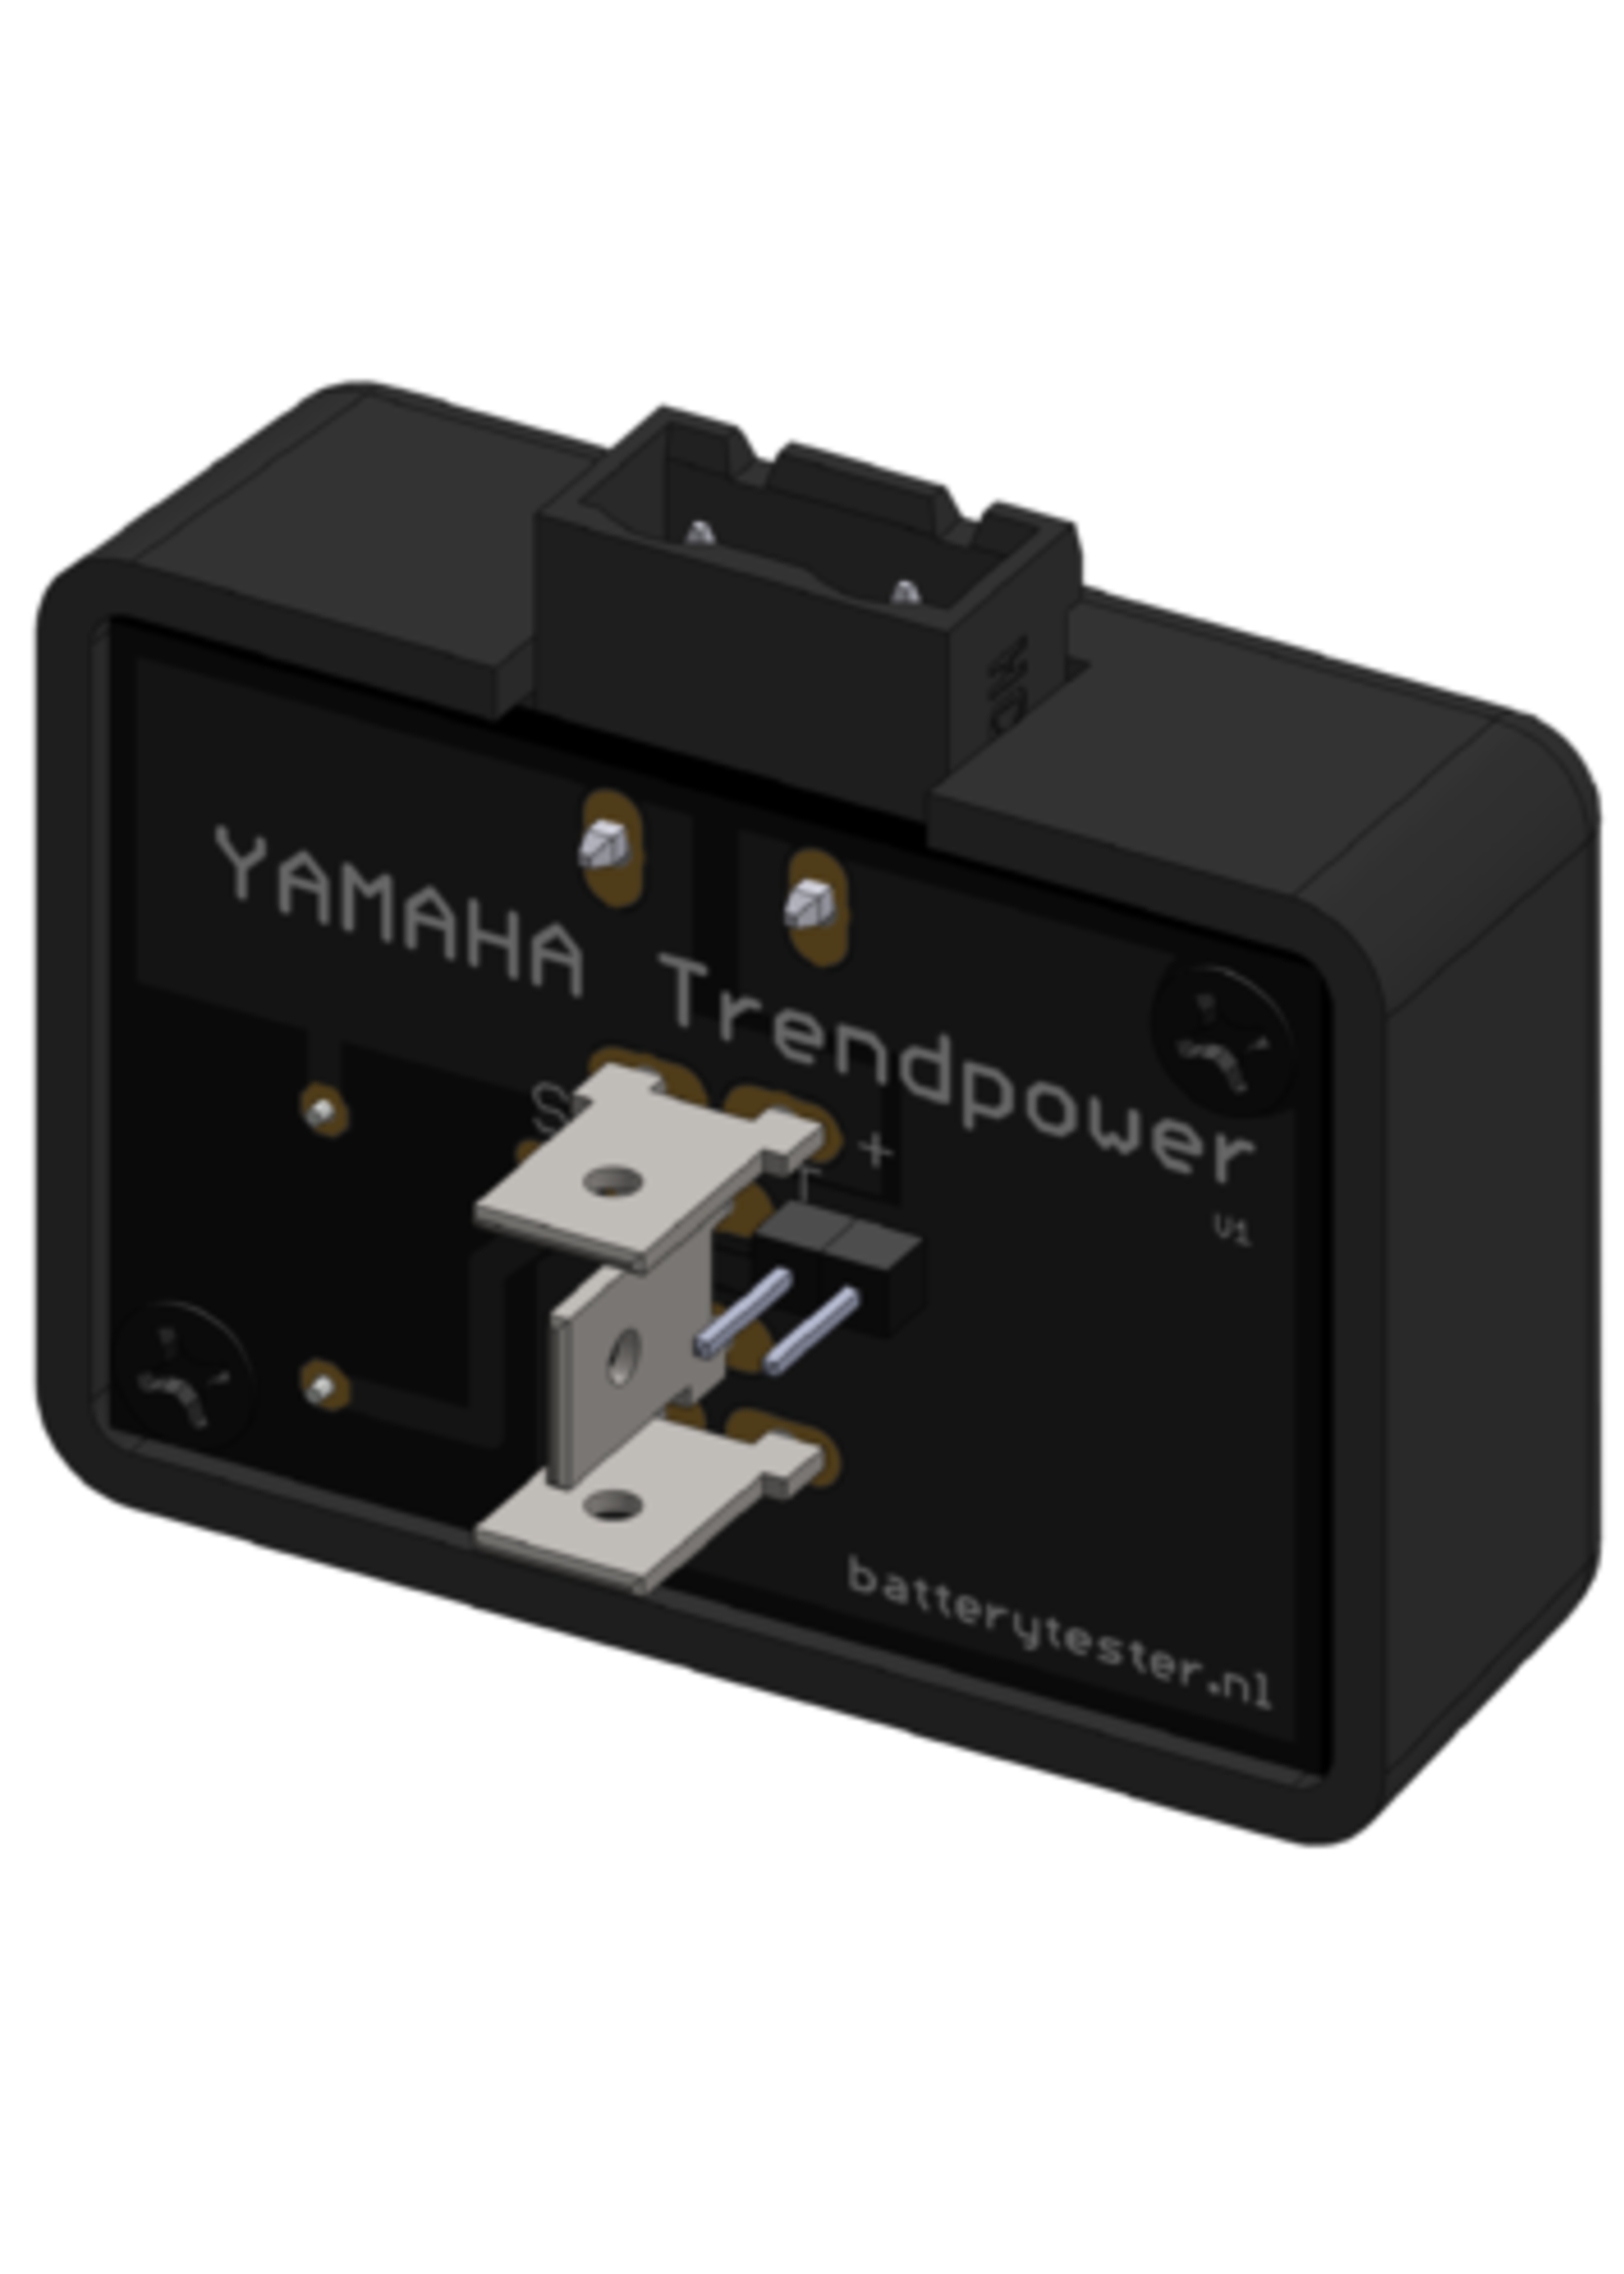 Yamaha Yamaha Trendpower Adapter